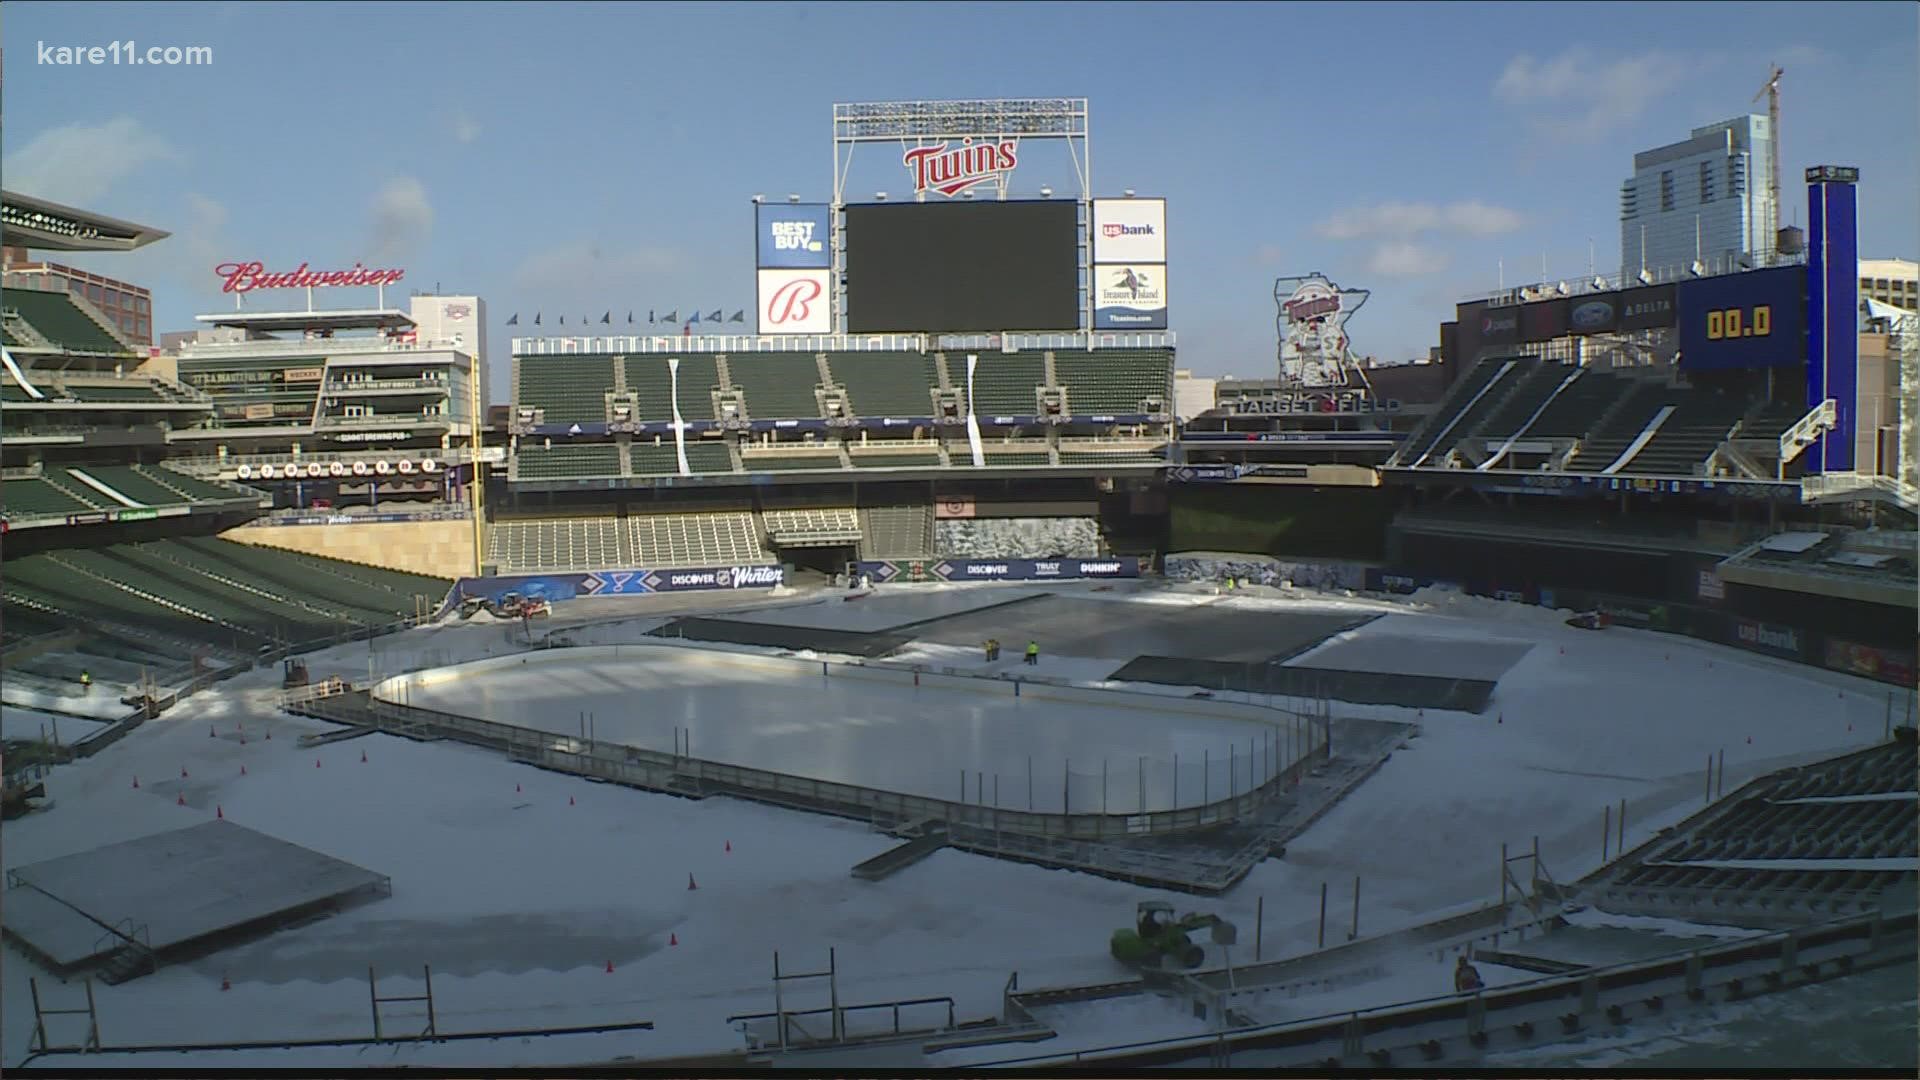 Minnesota's Target Field to host 2022 NHL Winter Classic